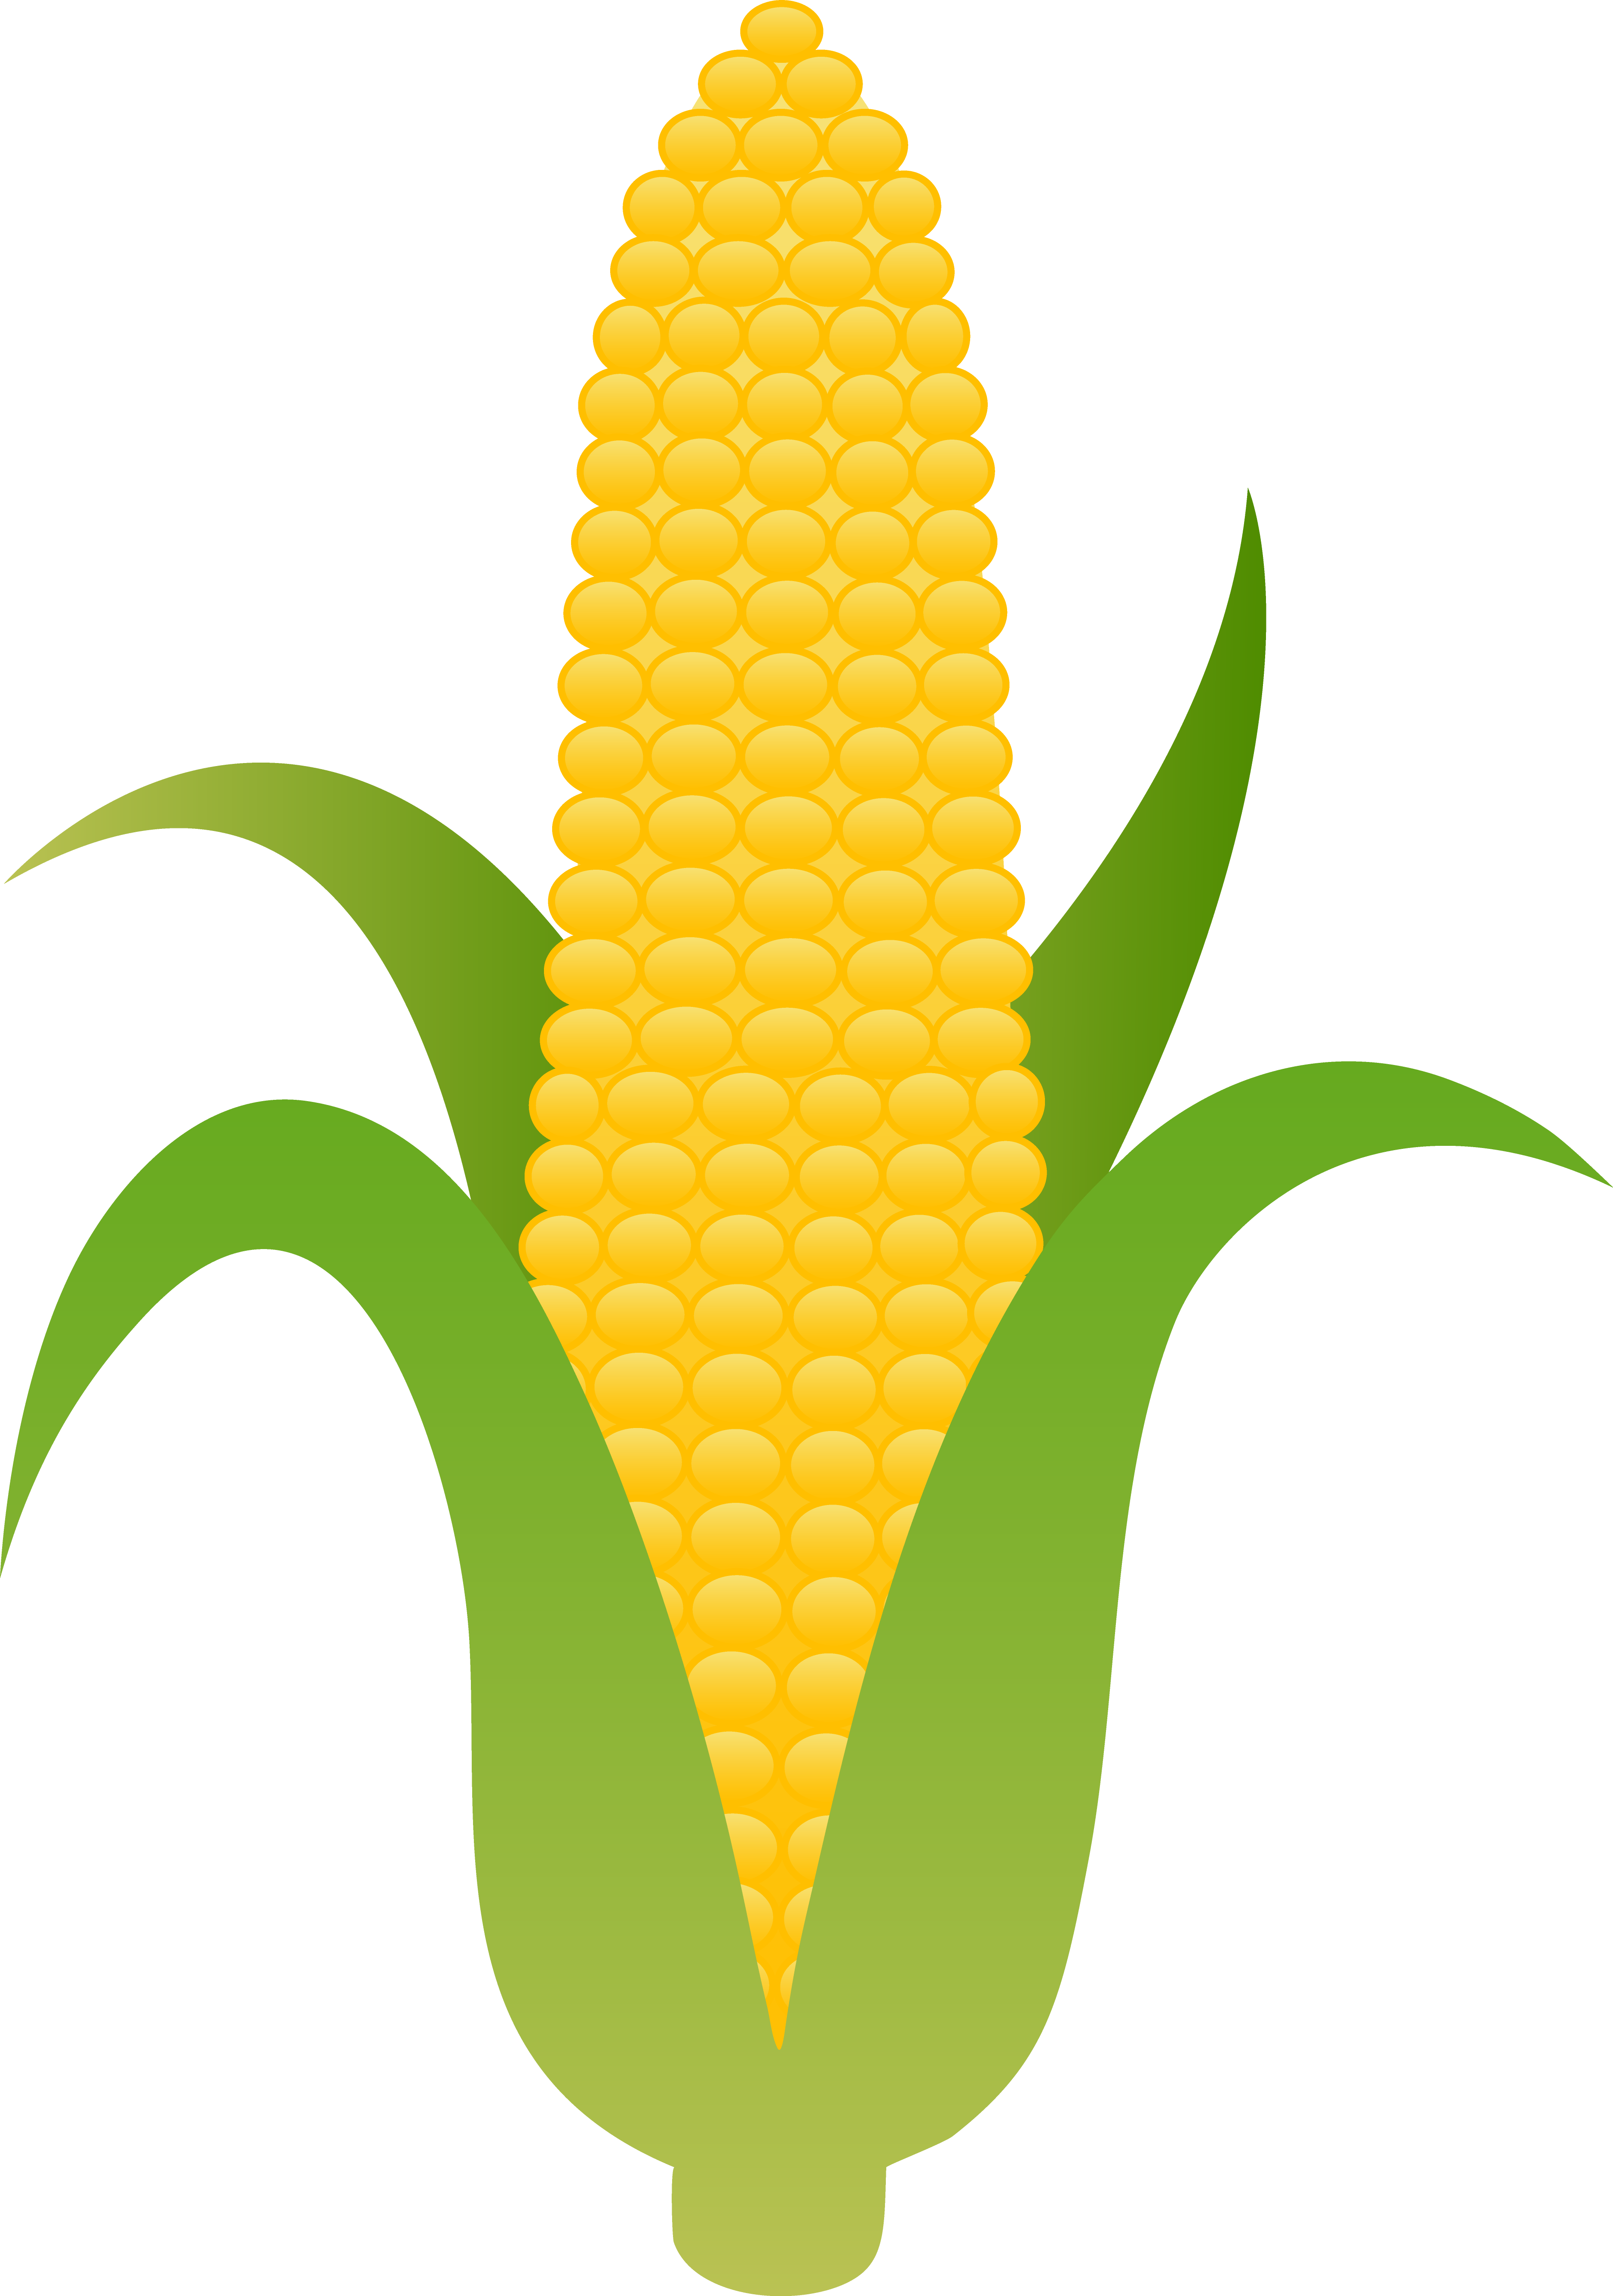 Corn On The Cob 19279 Plants 